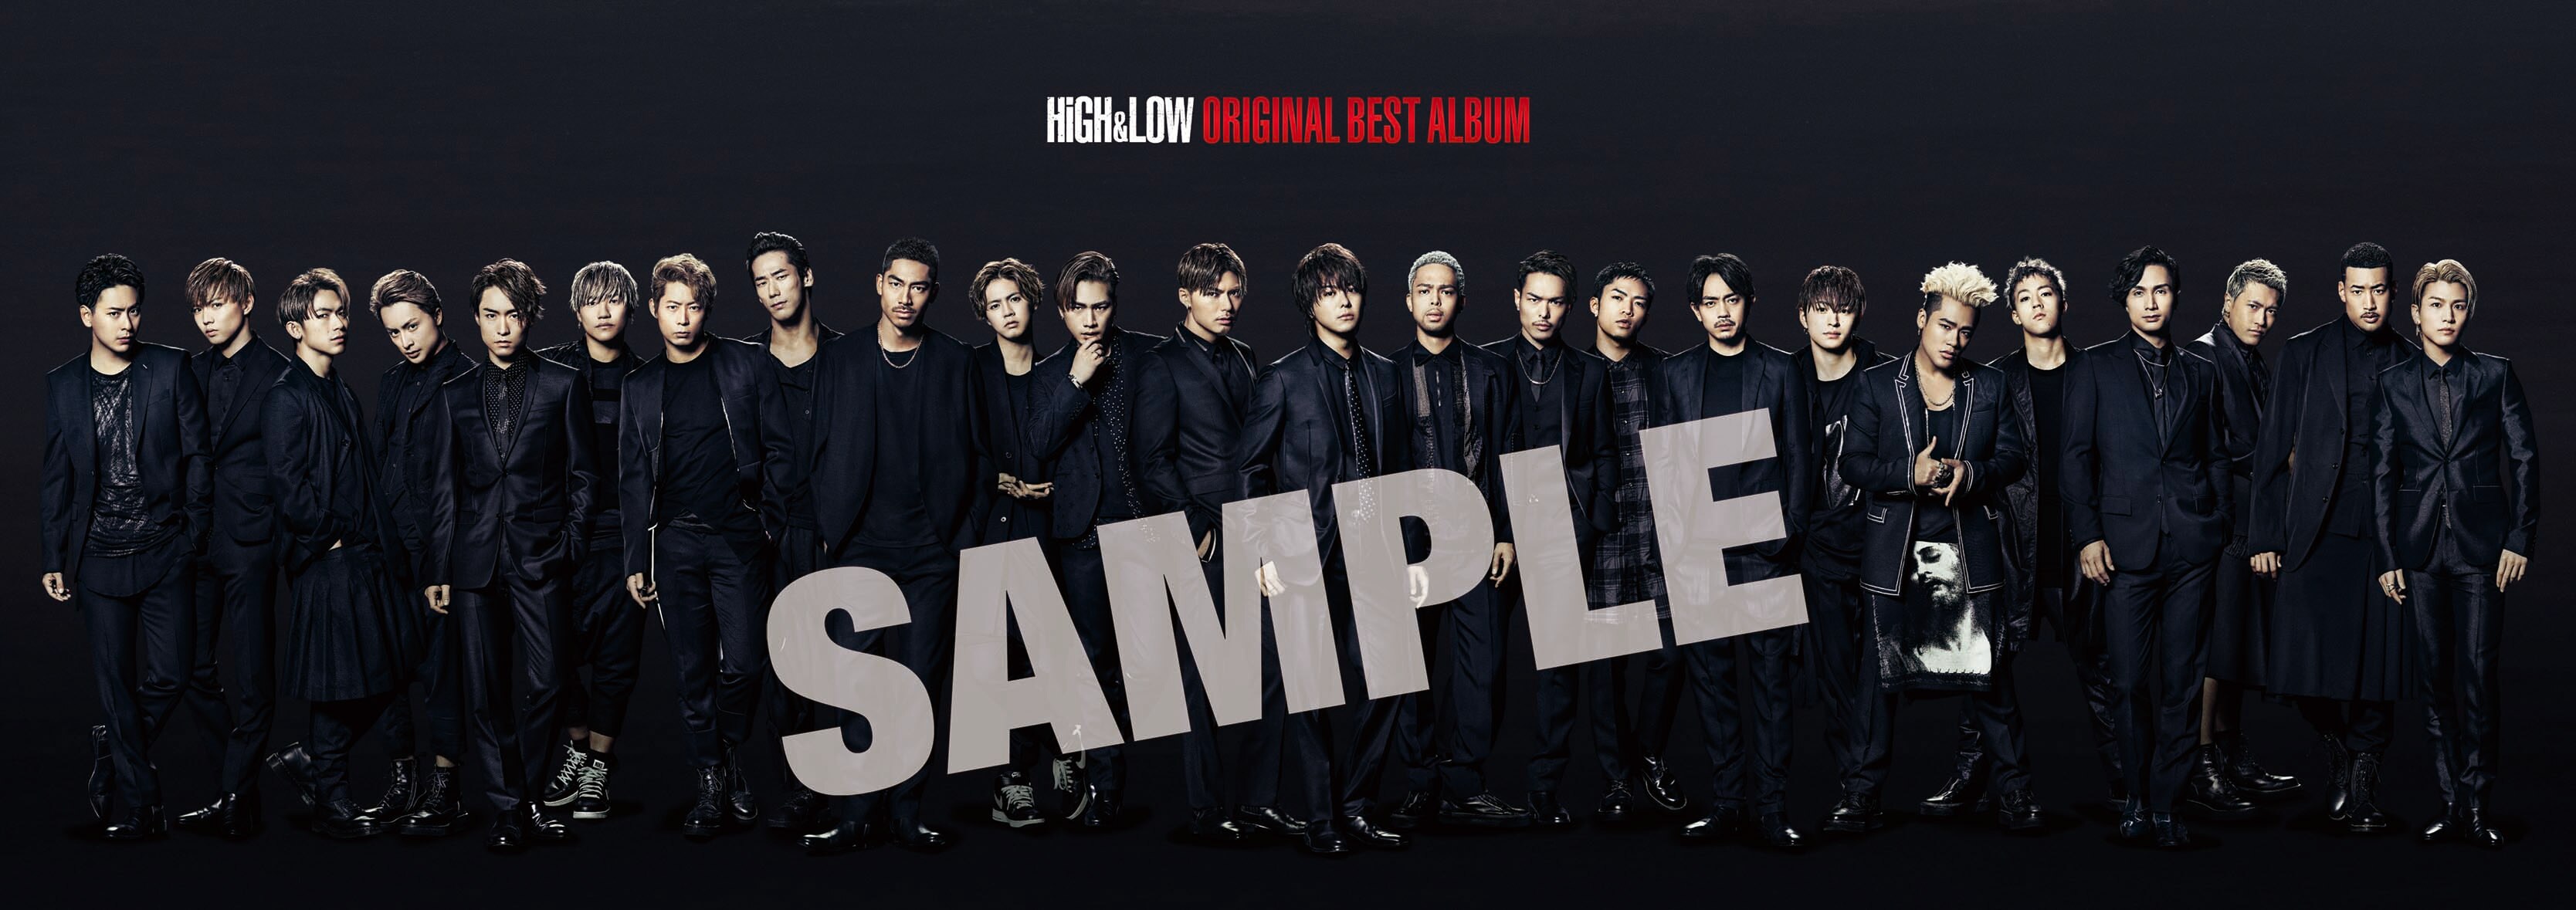 News High Low Original Best Album 購入者特典決定 Exile